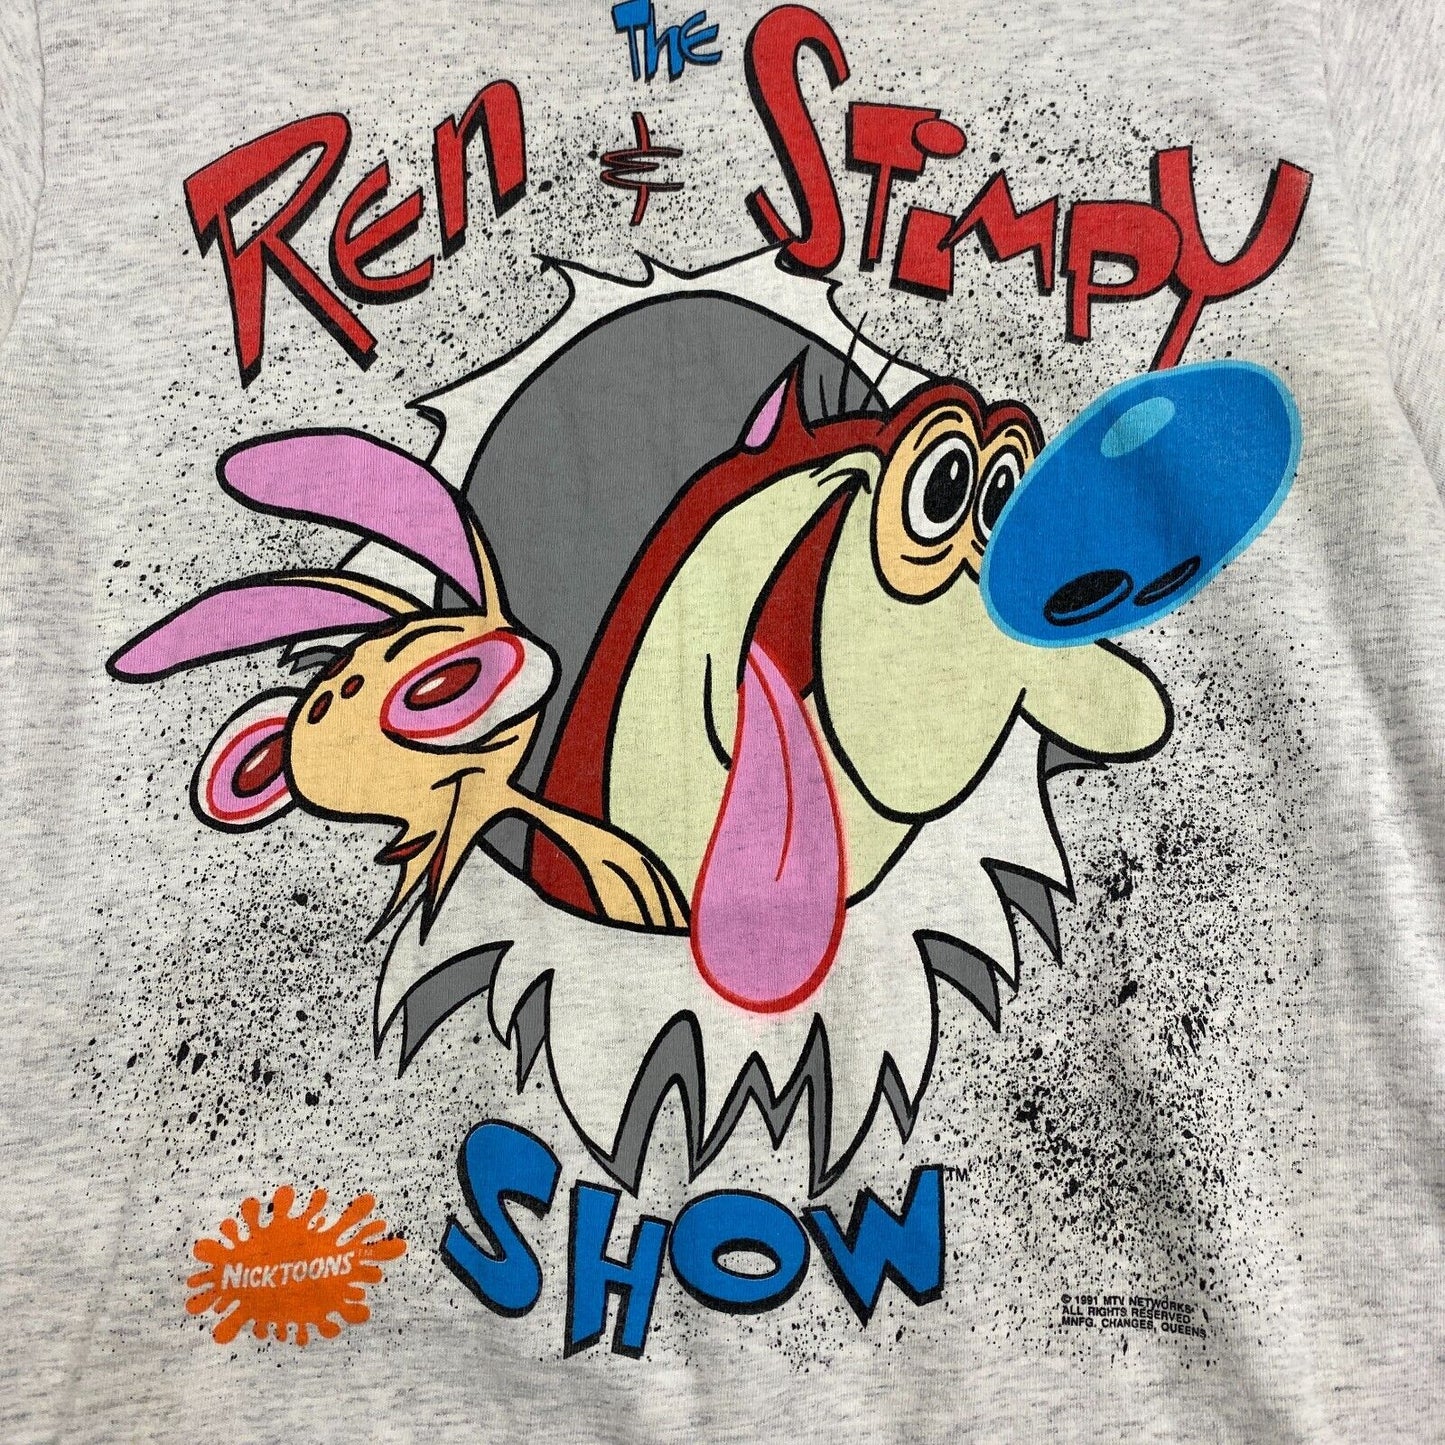 VINTAGE 1991 Ren & The Stimpy Show Nicktoons MTV Shirt sz Medium Men